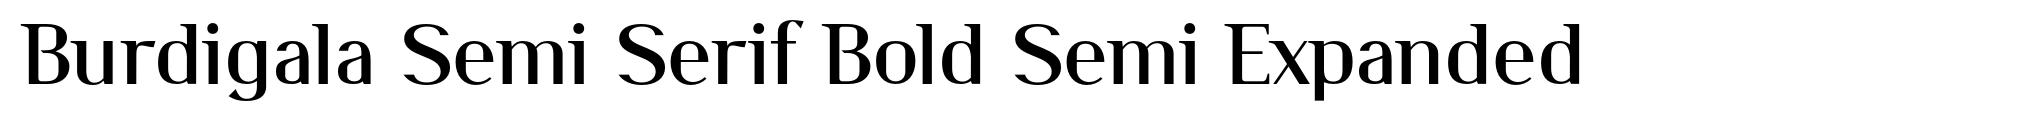 Burdigala Semi Serif Bold Semi Expanded image